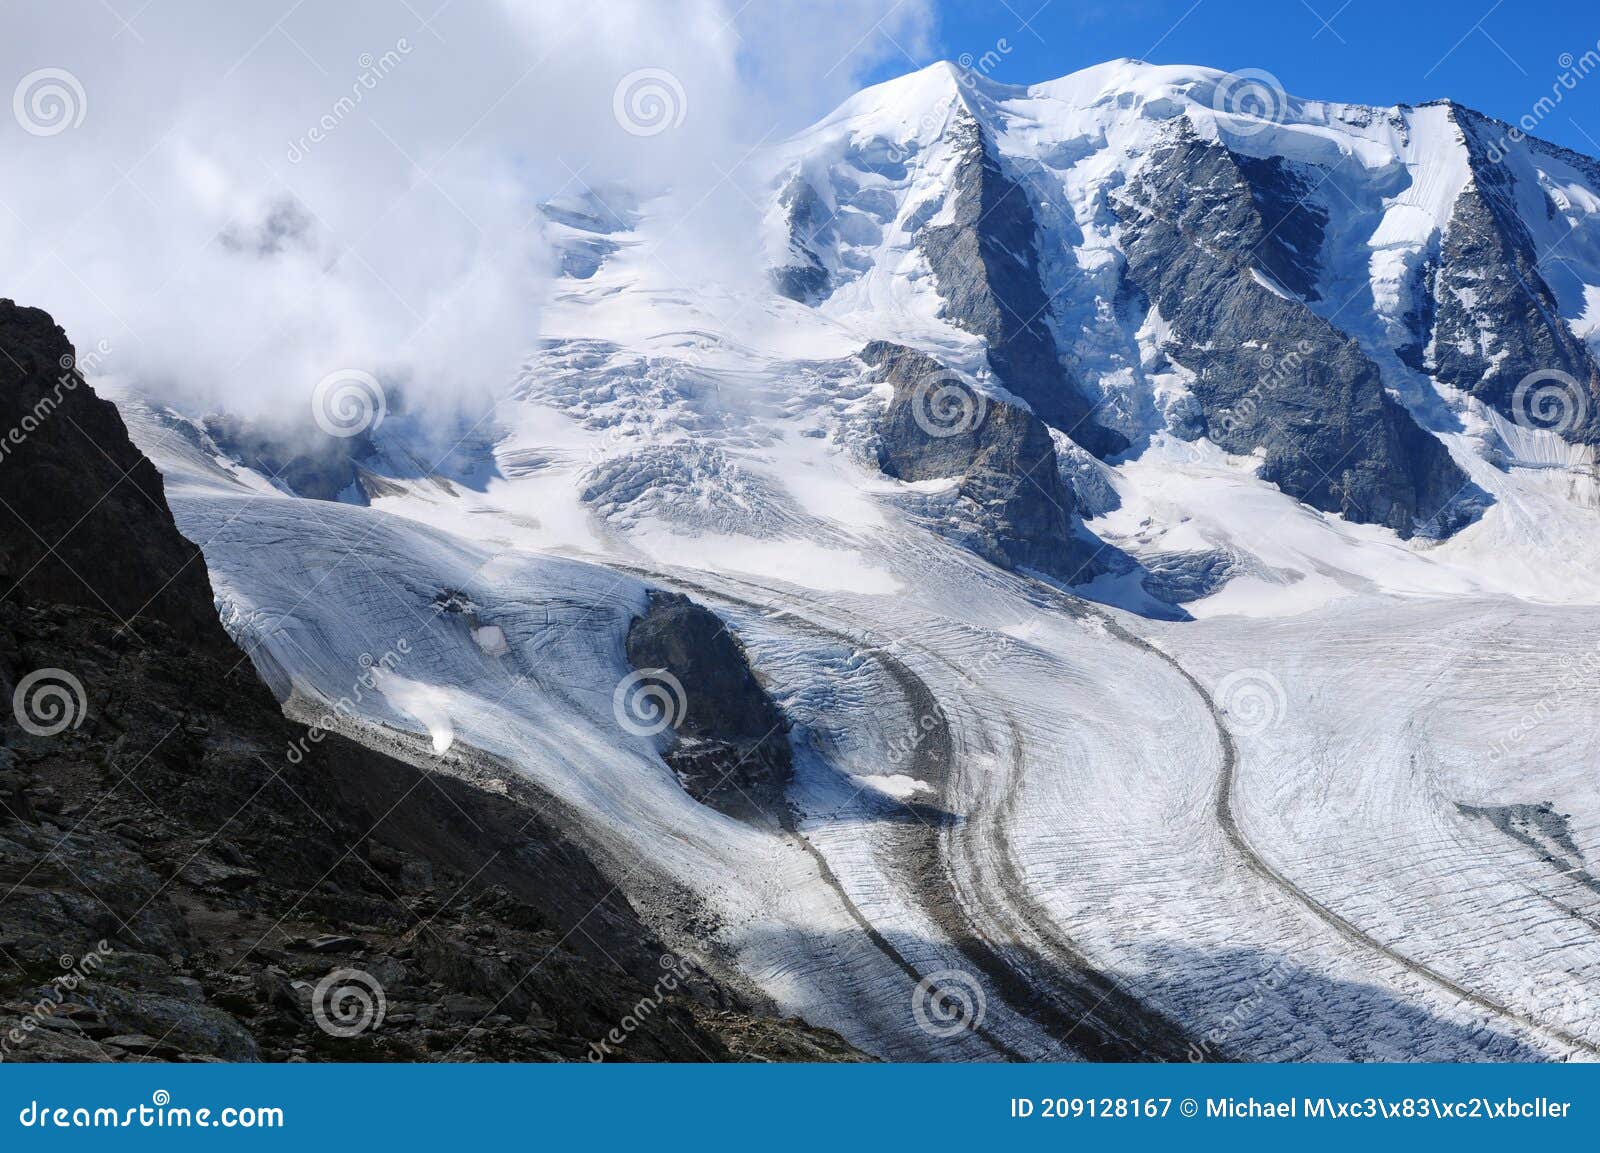 swiss alps: piz palÃÂ¼ peak and melting glaciers due to global clima change